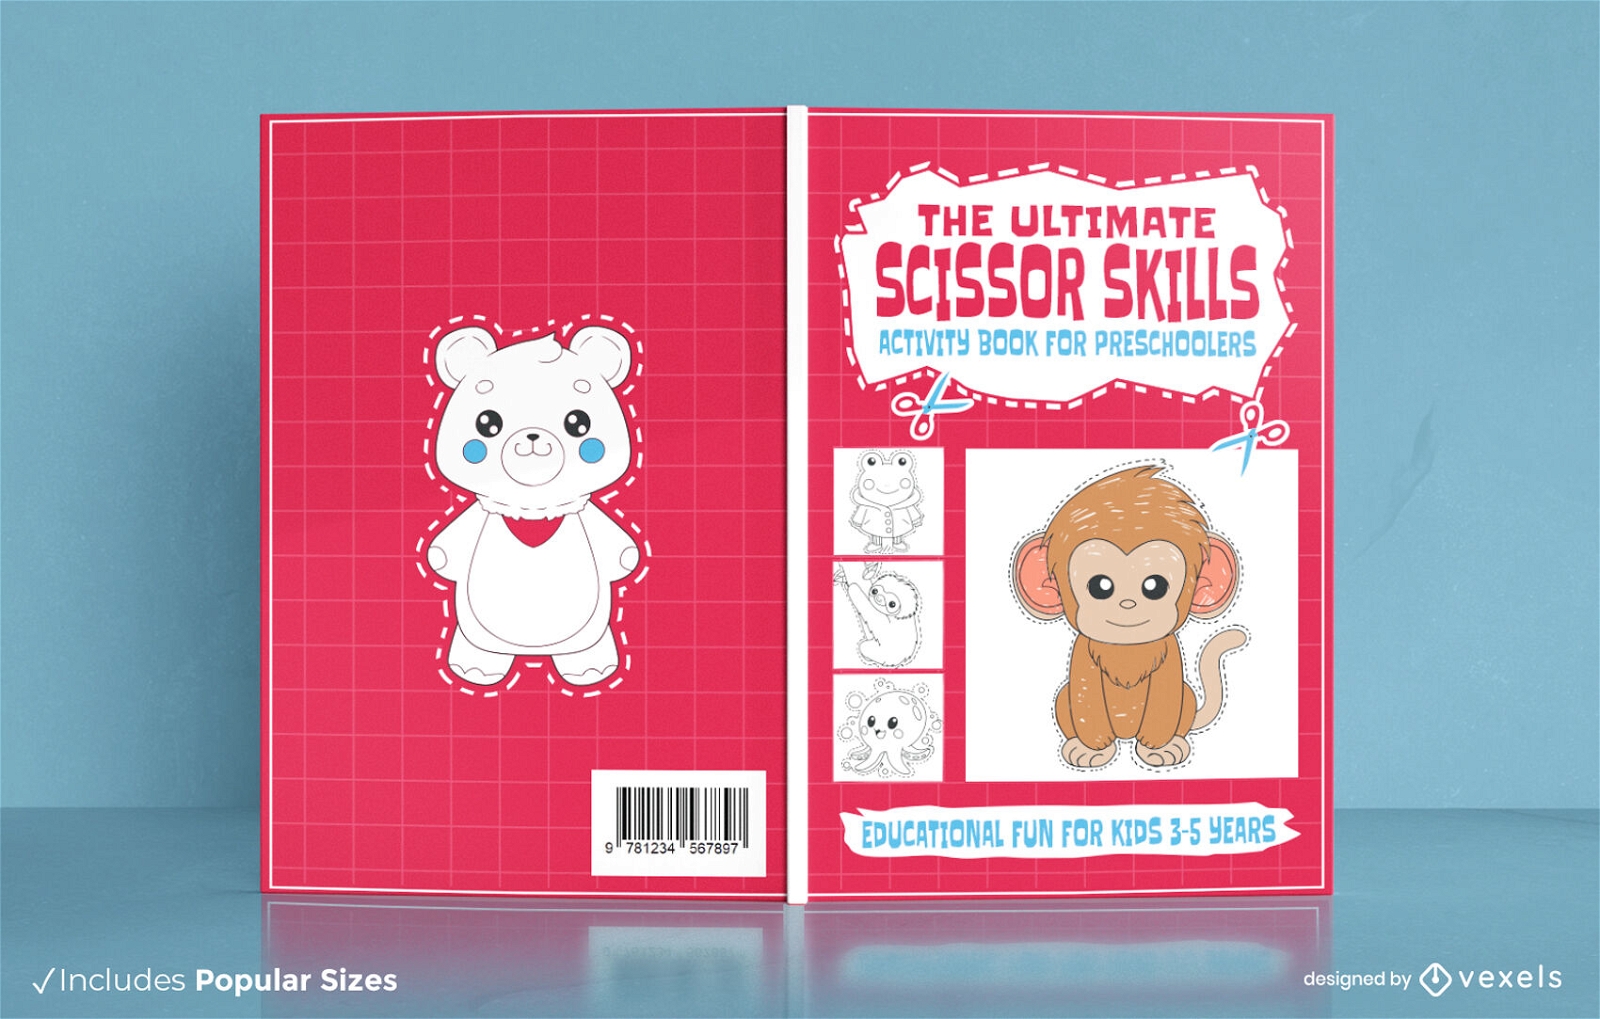 Scissor skills activity book cover design KDP